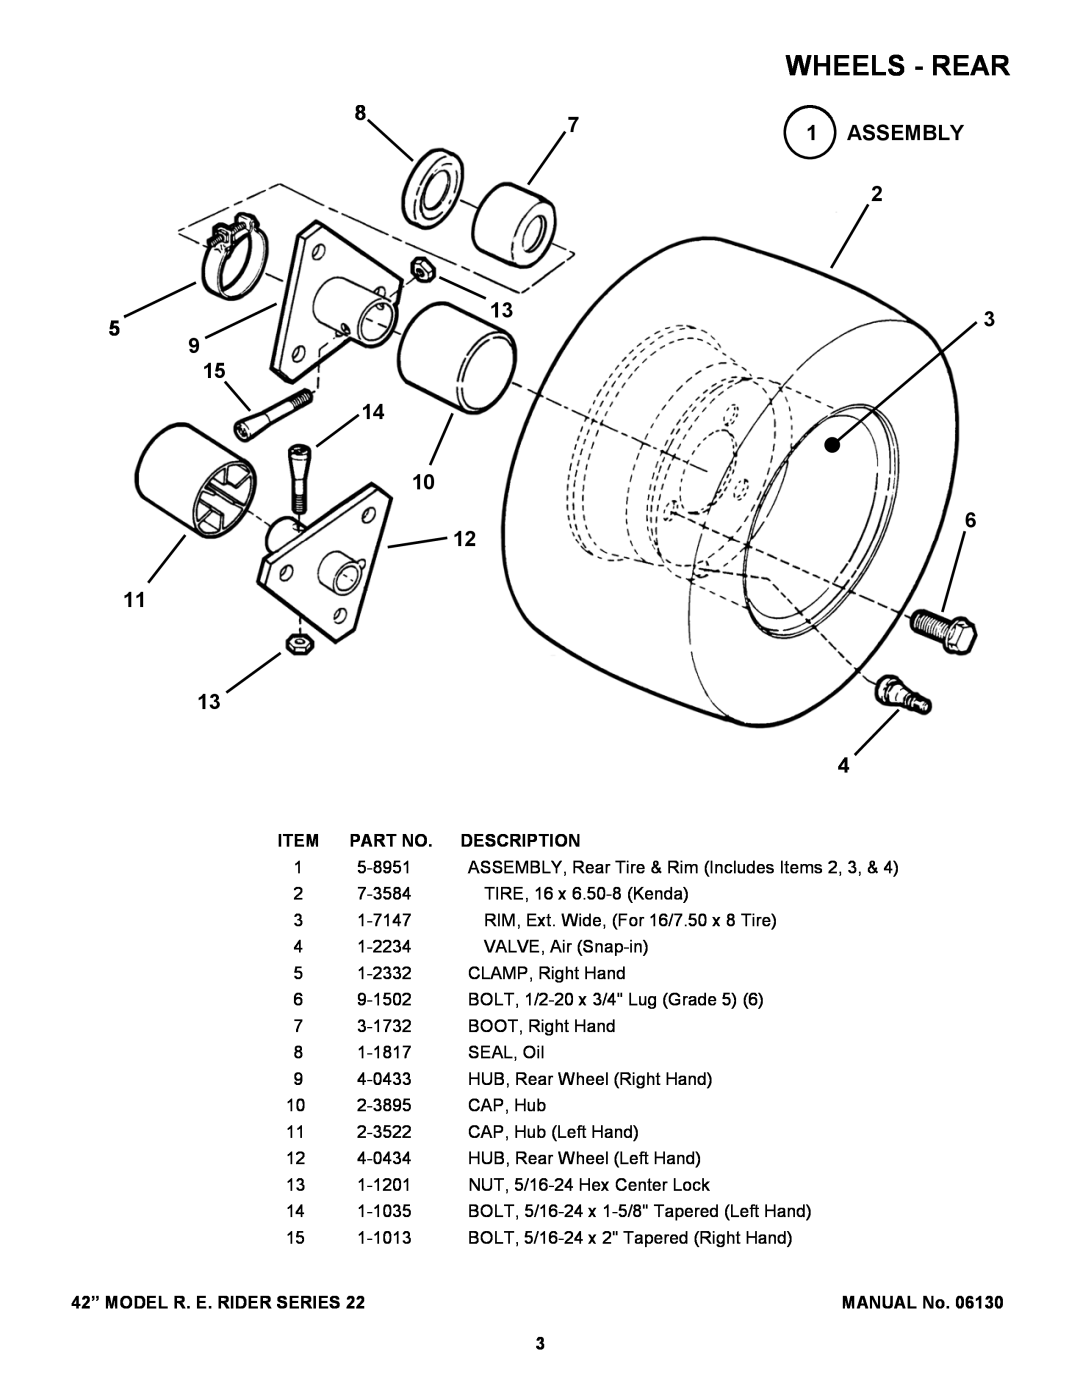 Snapper 421622BVE manual Wheels - Rear, Assembly, Description, 42” MODEL R. E. RIDER SERIES, MANUAL No 